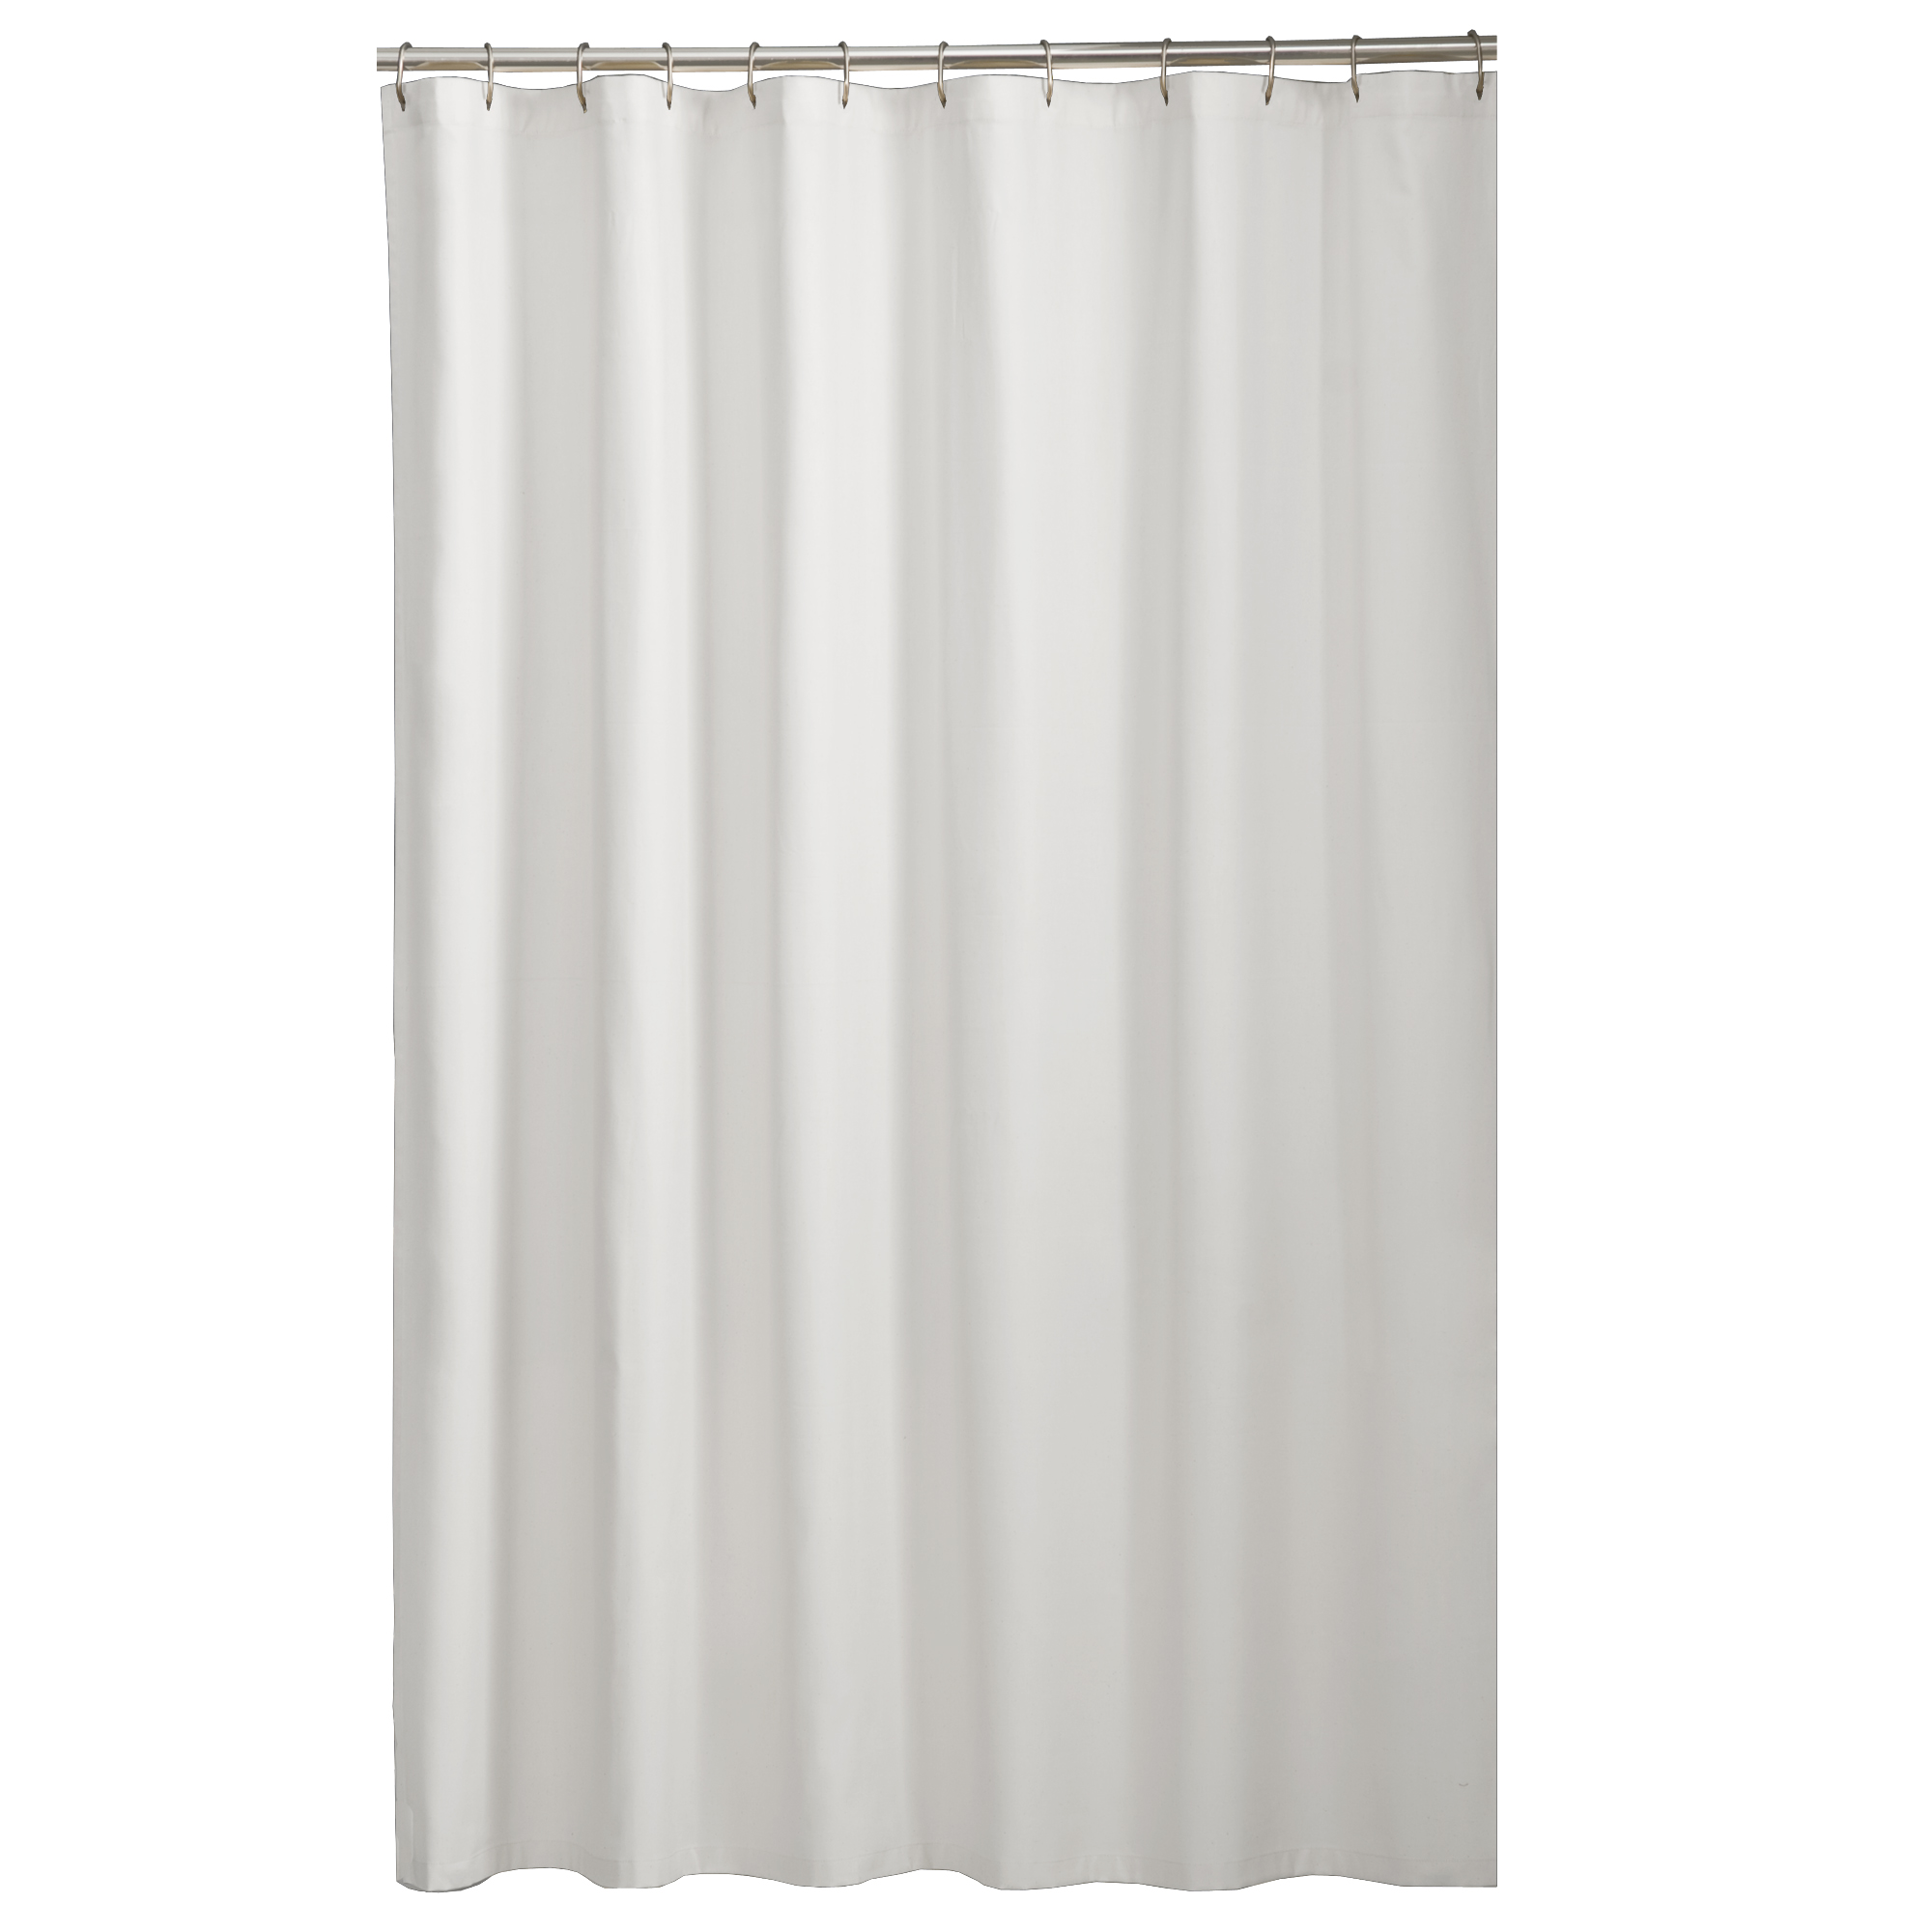  Shower Curtain Bath Accessories Walmart Canada Online Shopping Images 2000x2000